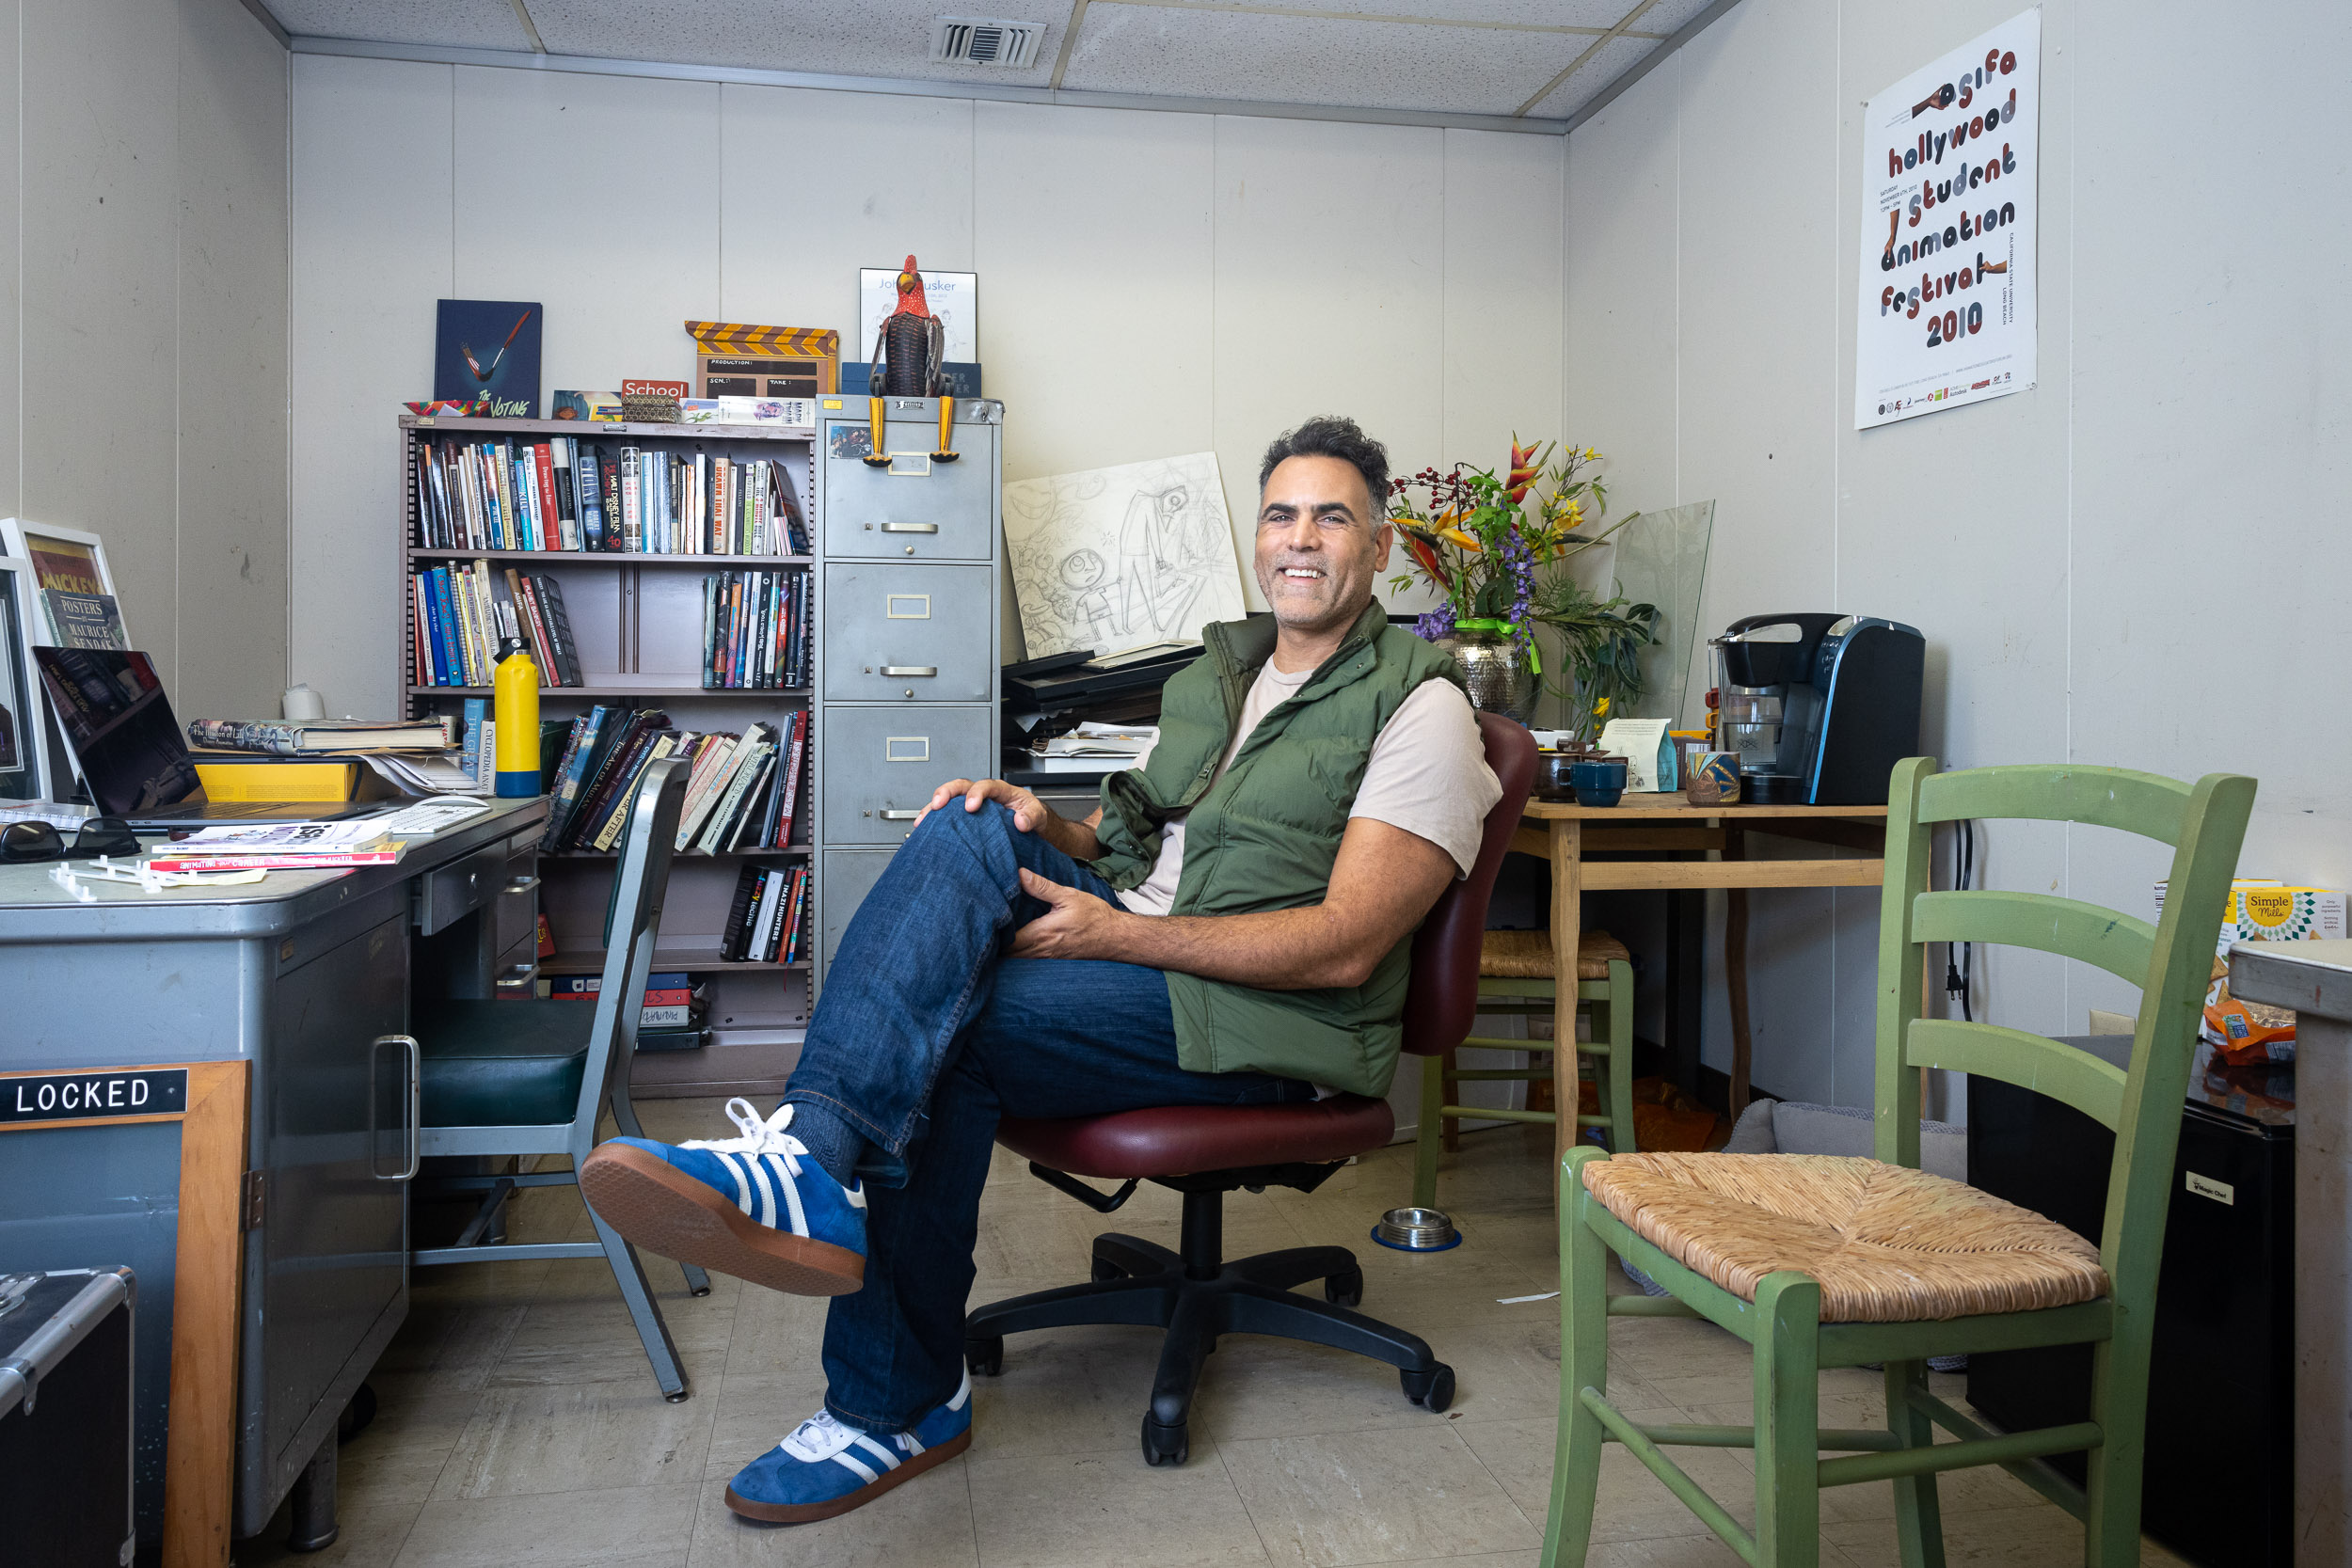 Professor Aubrey Mintz sitting in a chair in his office